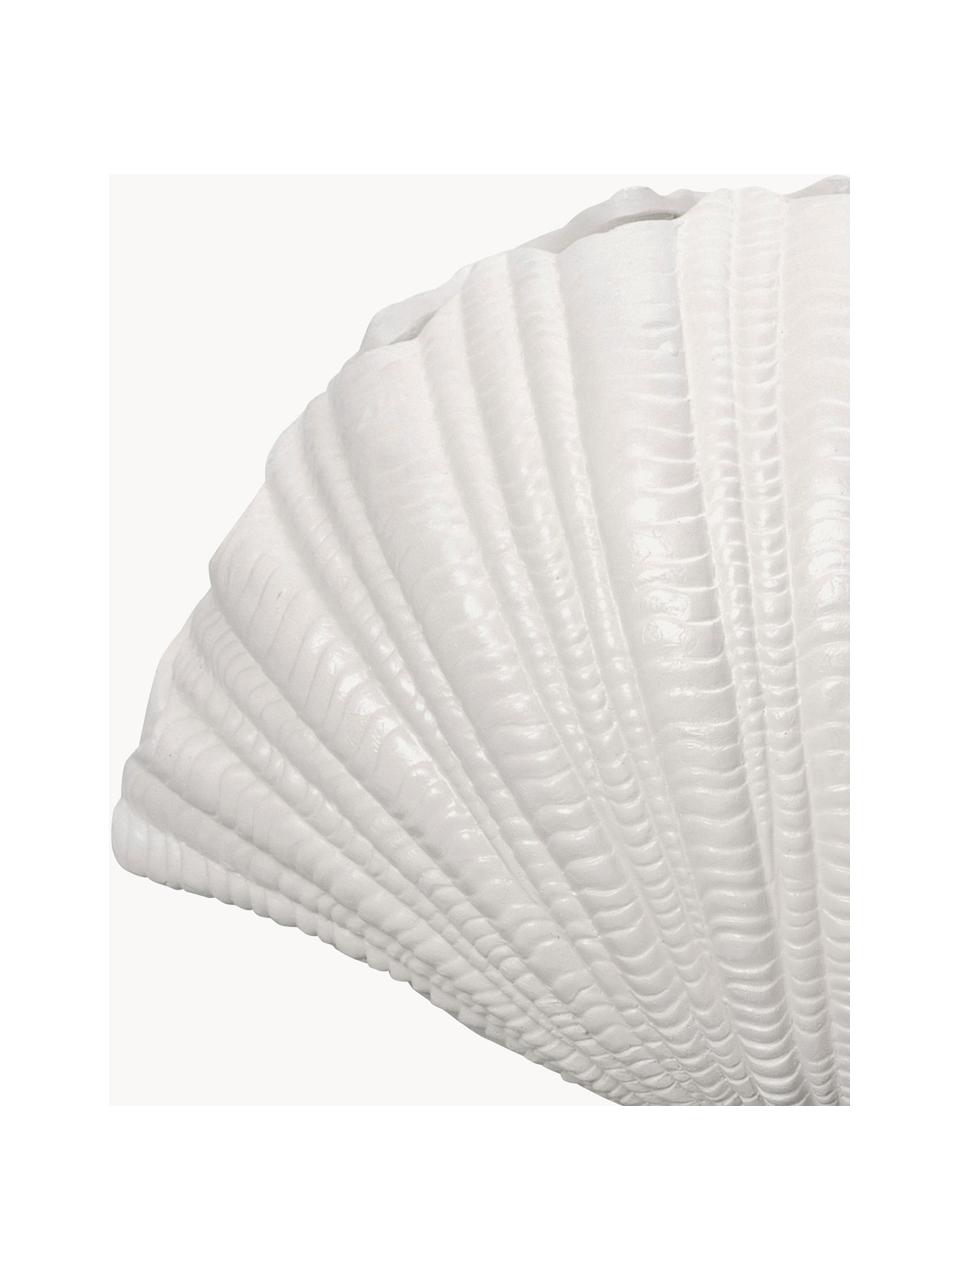 Grote design vaas Shell in schelp vorm, H 21 cm, Kunststof, Wit, B 31 x H 21 cm